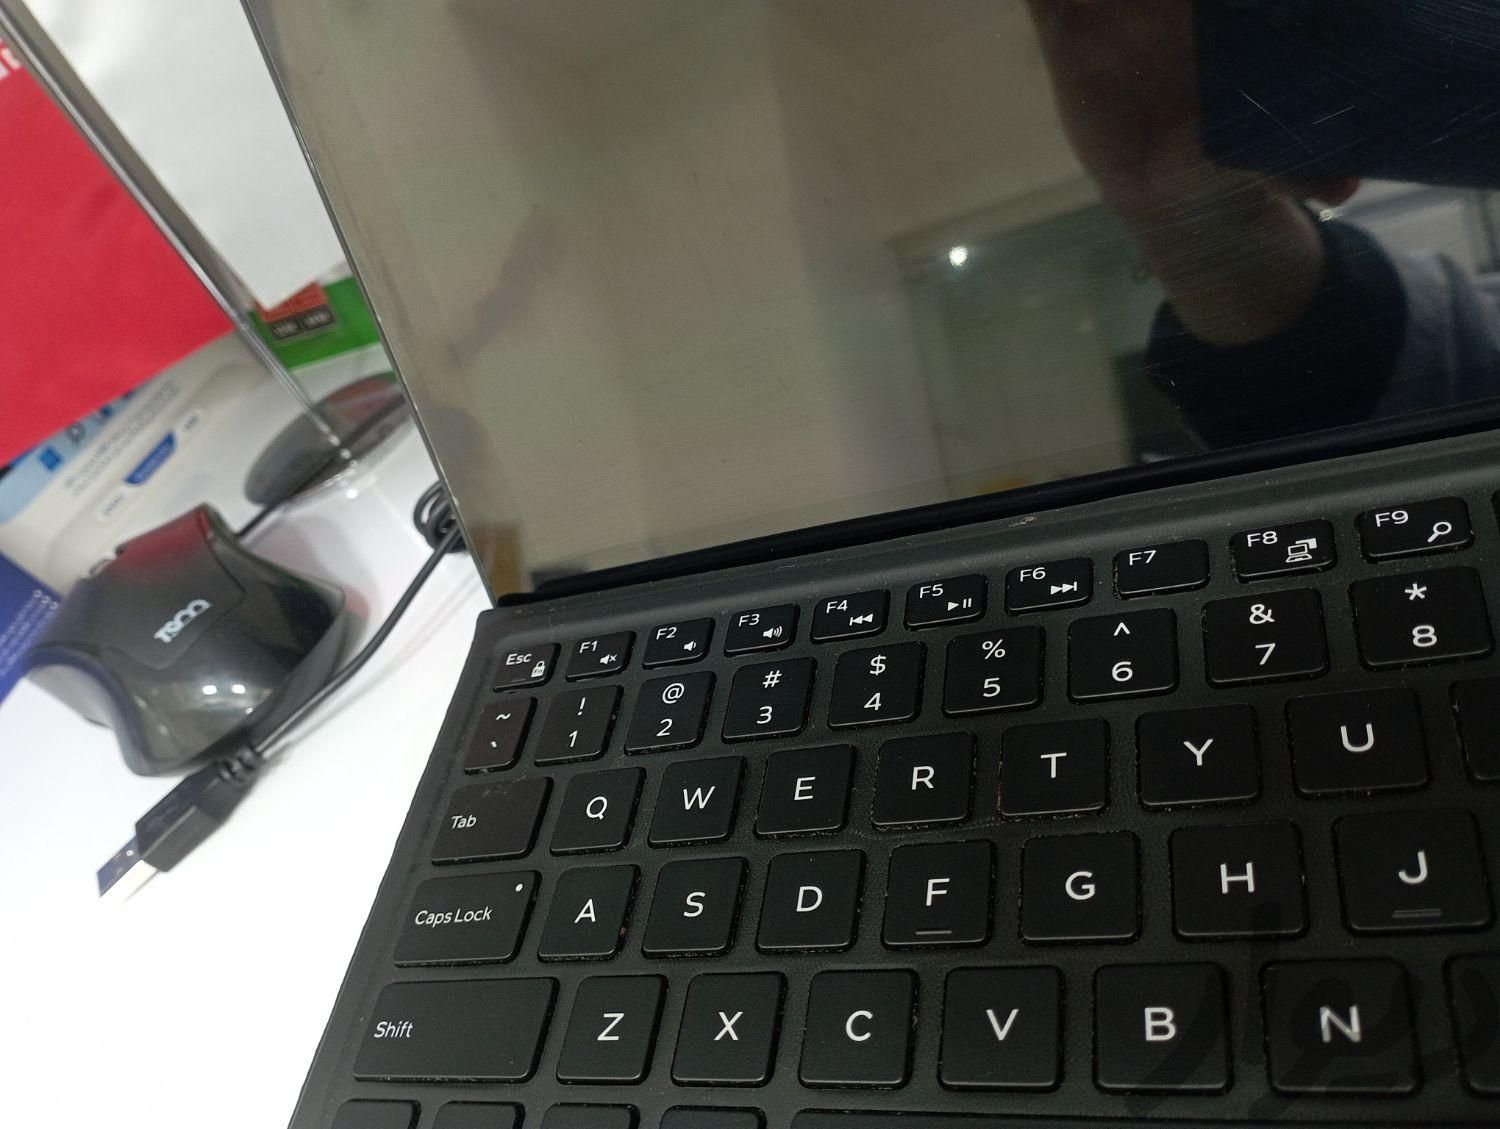 لپ تاپ دل Dell 5285 i5 تاچ|رایانه همراه|تهران, تهرانپارس غربی|دیوار